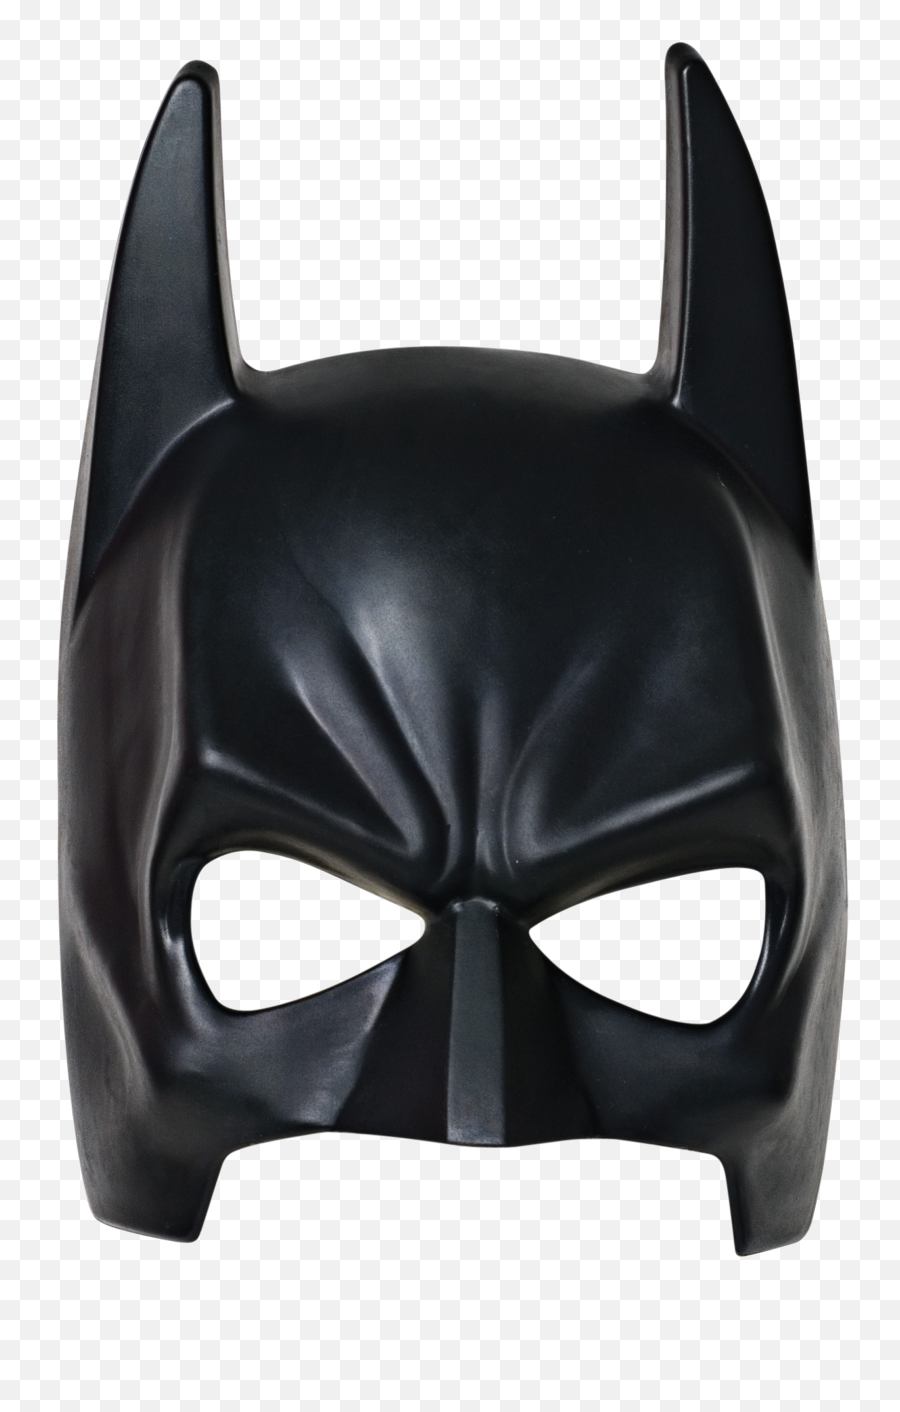 Batman Mask Png Download Image Arts - Batman Mask Png,Black Mask Png